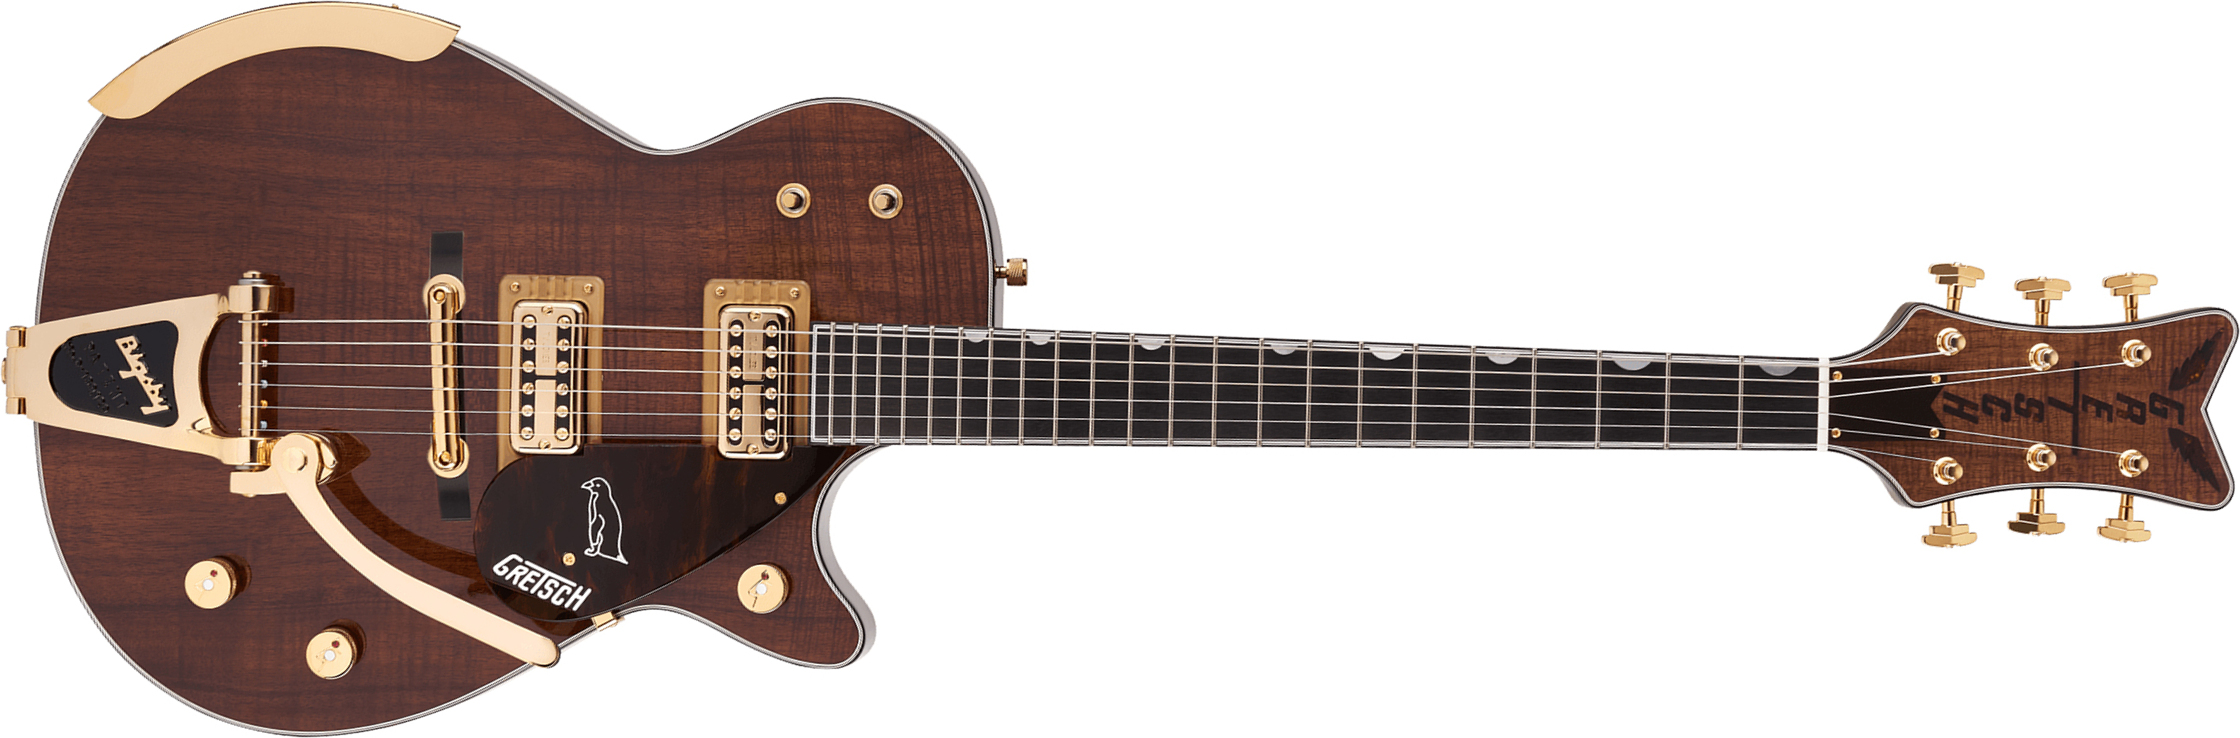 Gretsch G6134t-ltd Penguin Koa Bigsby Pro Jap 2h Trem Eb - Natural - Single cut electric guitar - Main picture